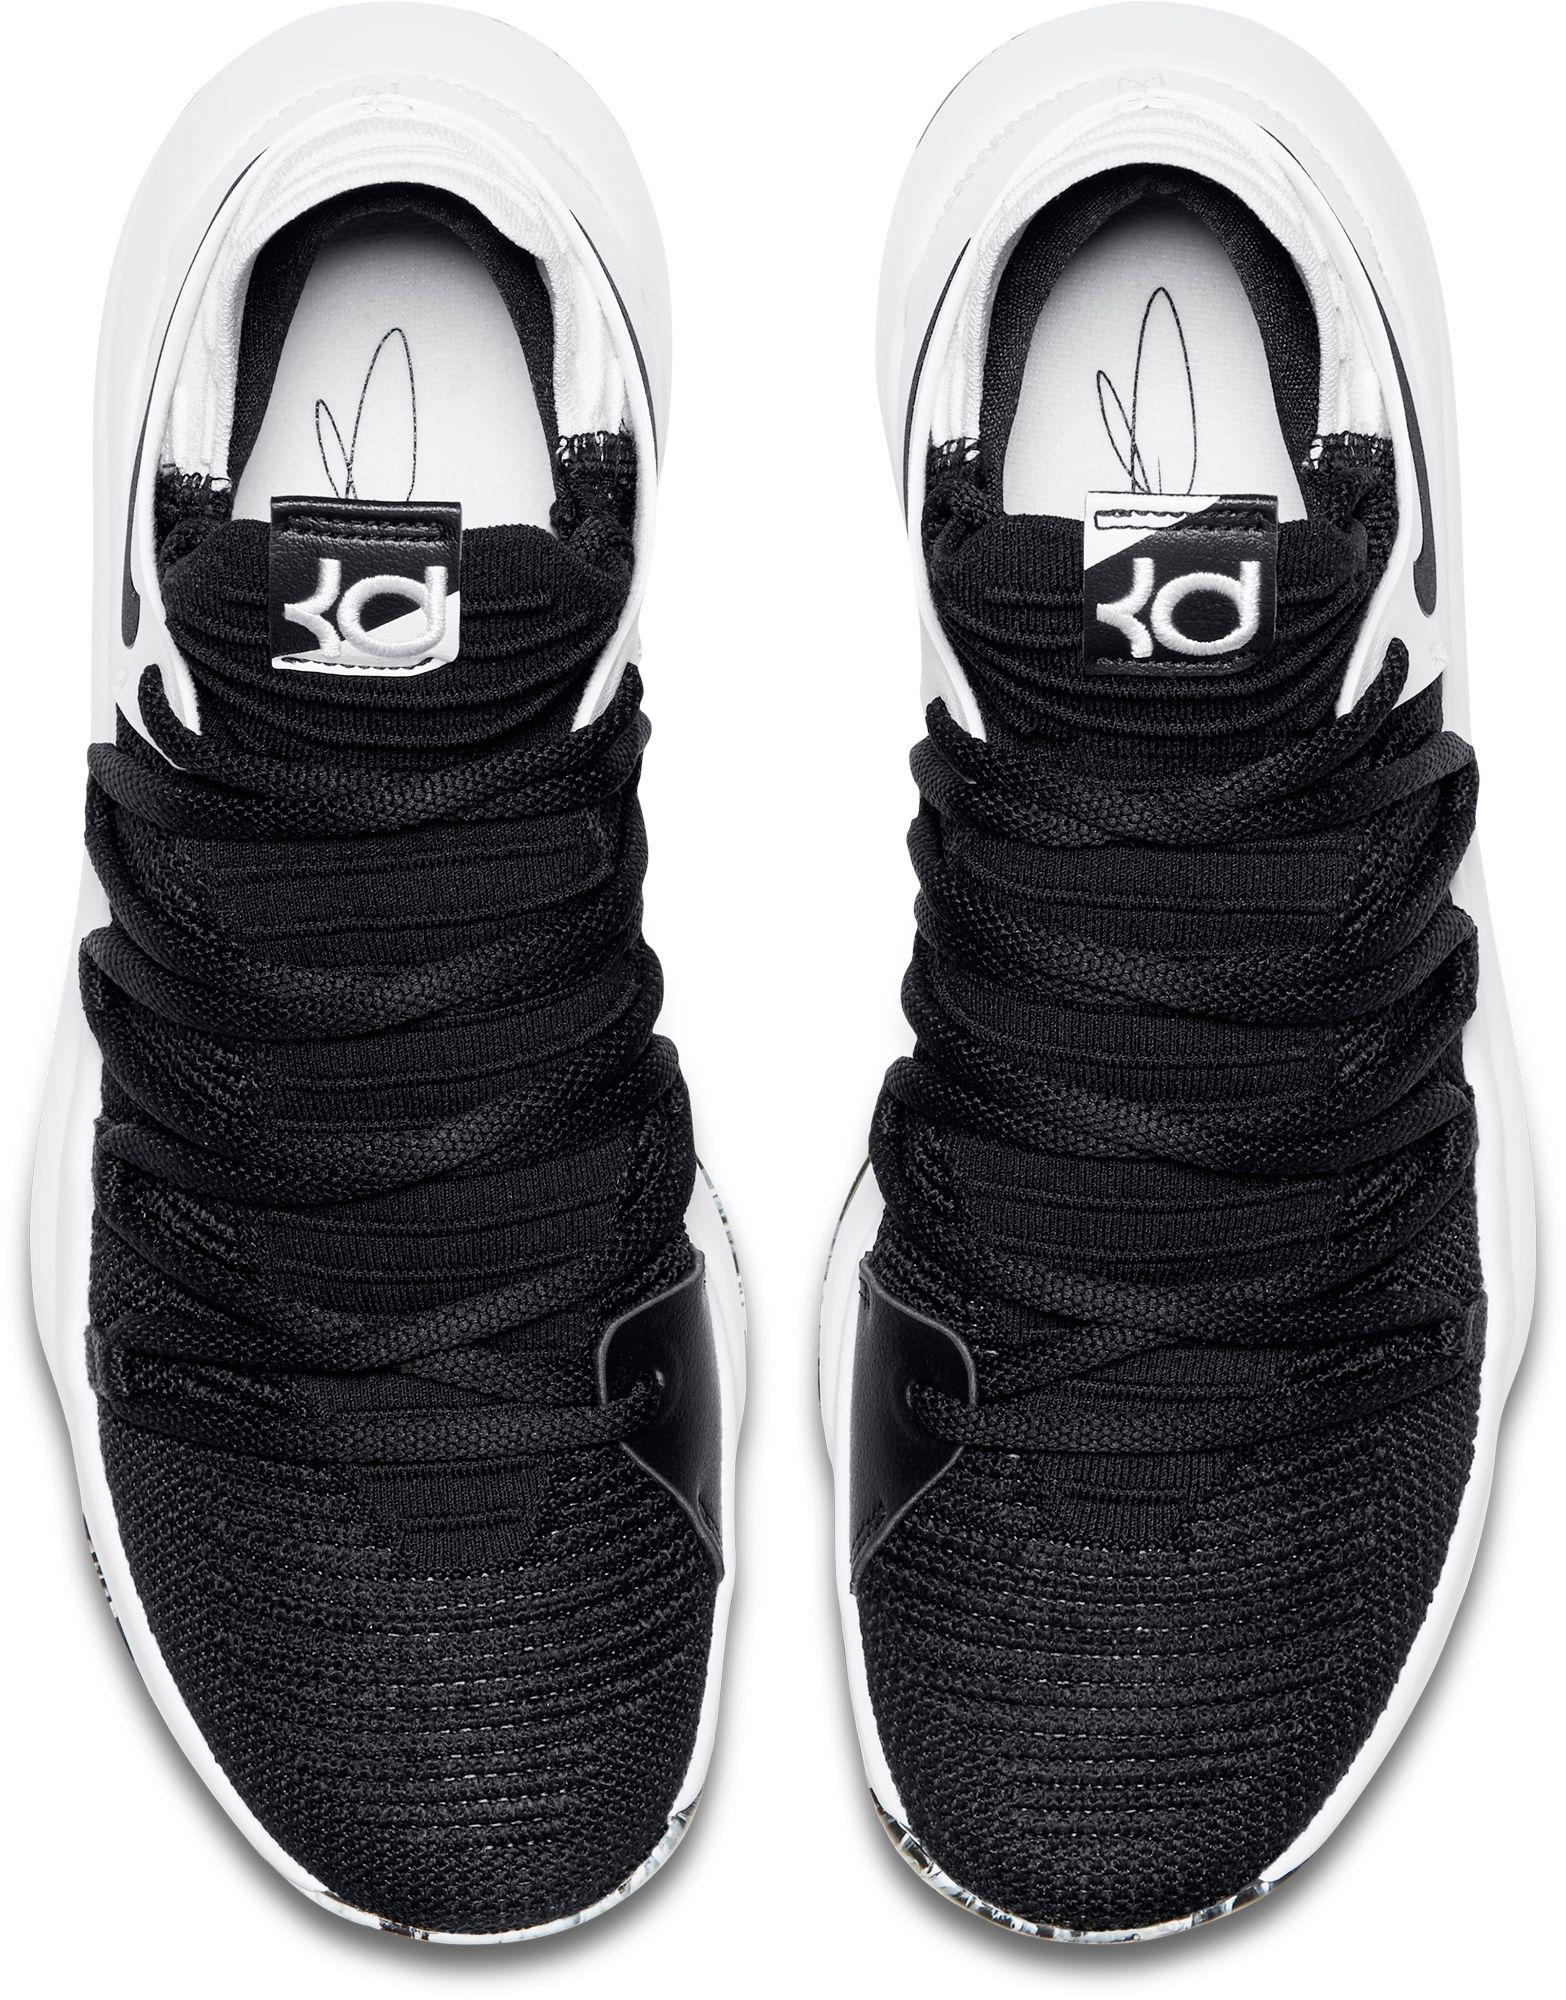 Nike Zoom Kd 10 Basketball Shoes in Black/White (Black ...